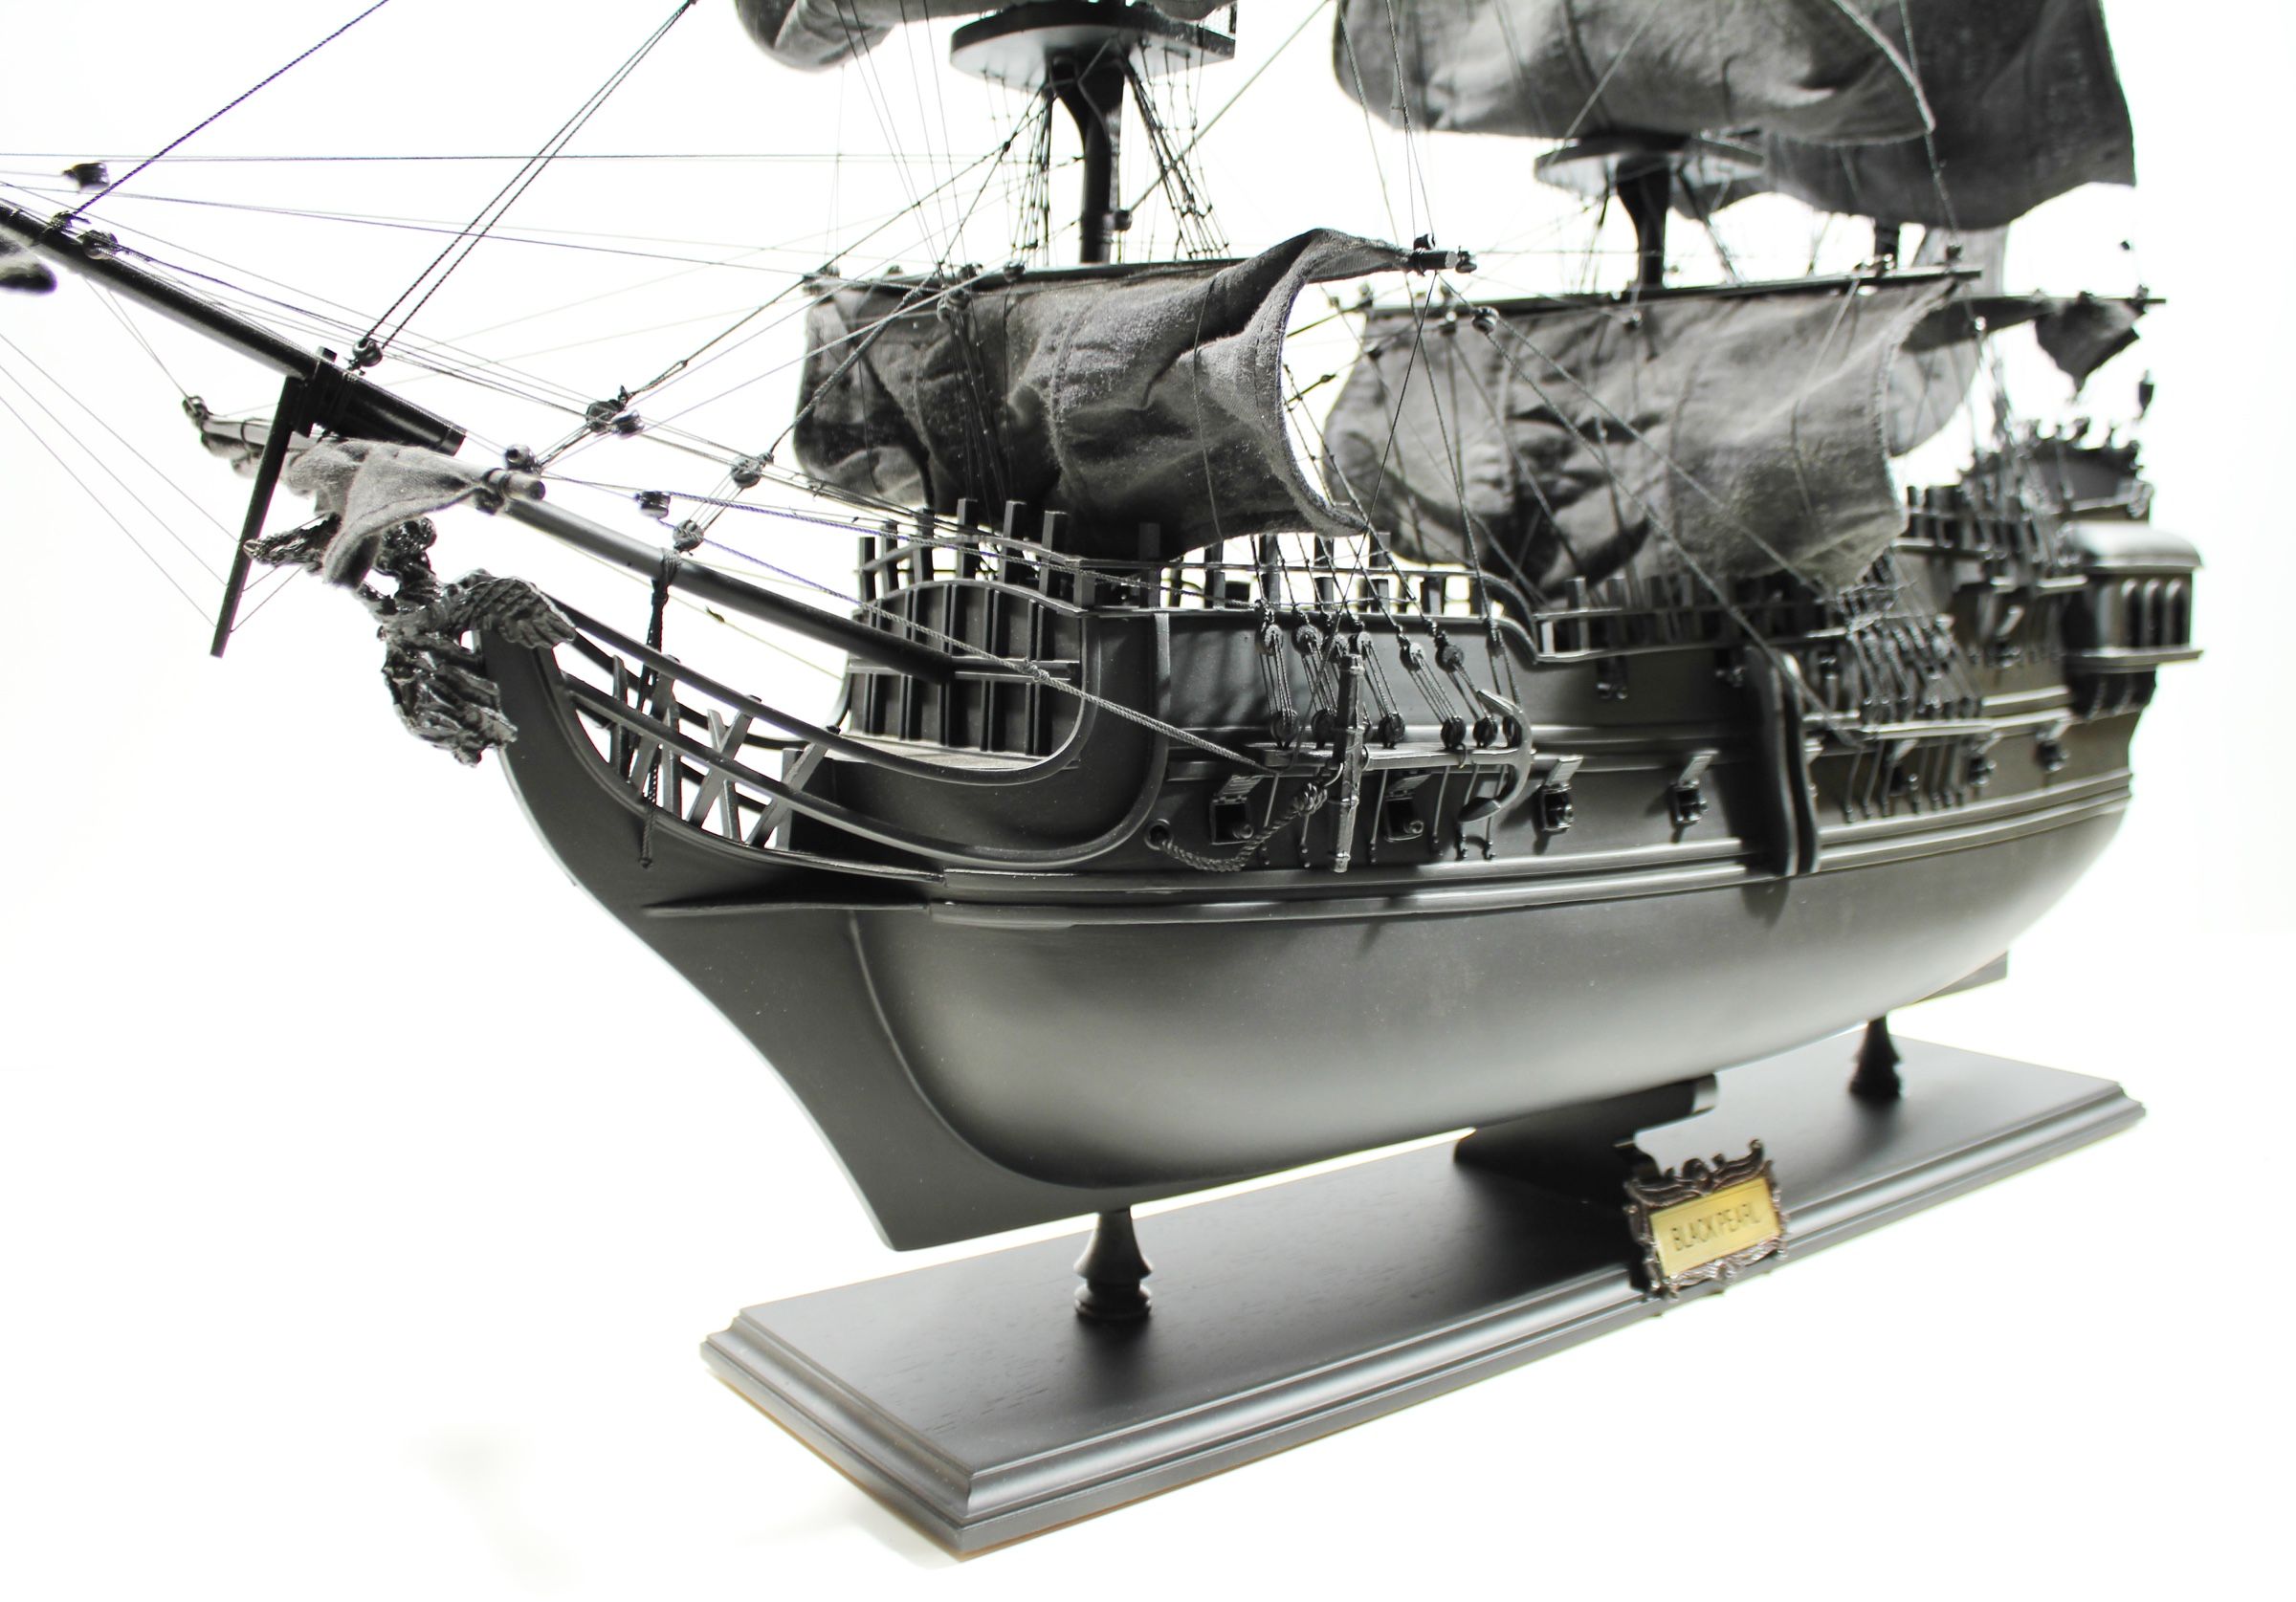 Bateau pirate Black Pearl - Maquettes de bateaux Nain